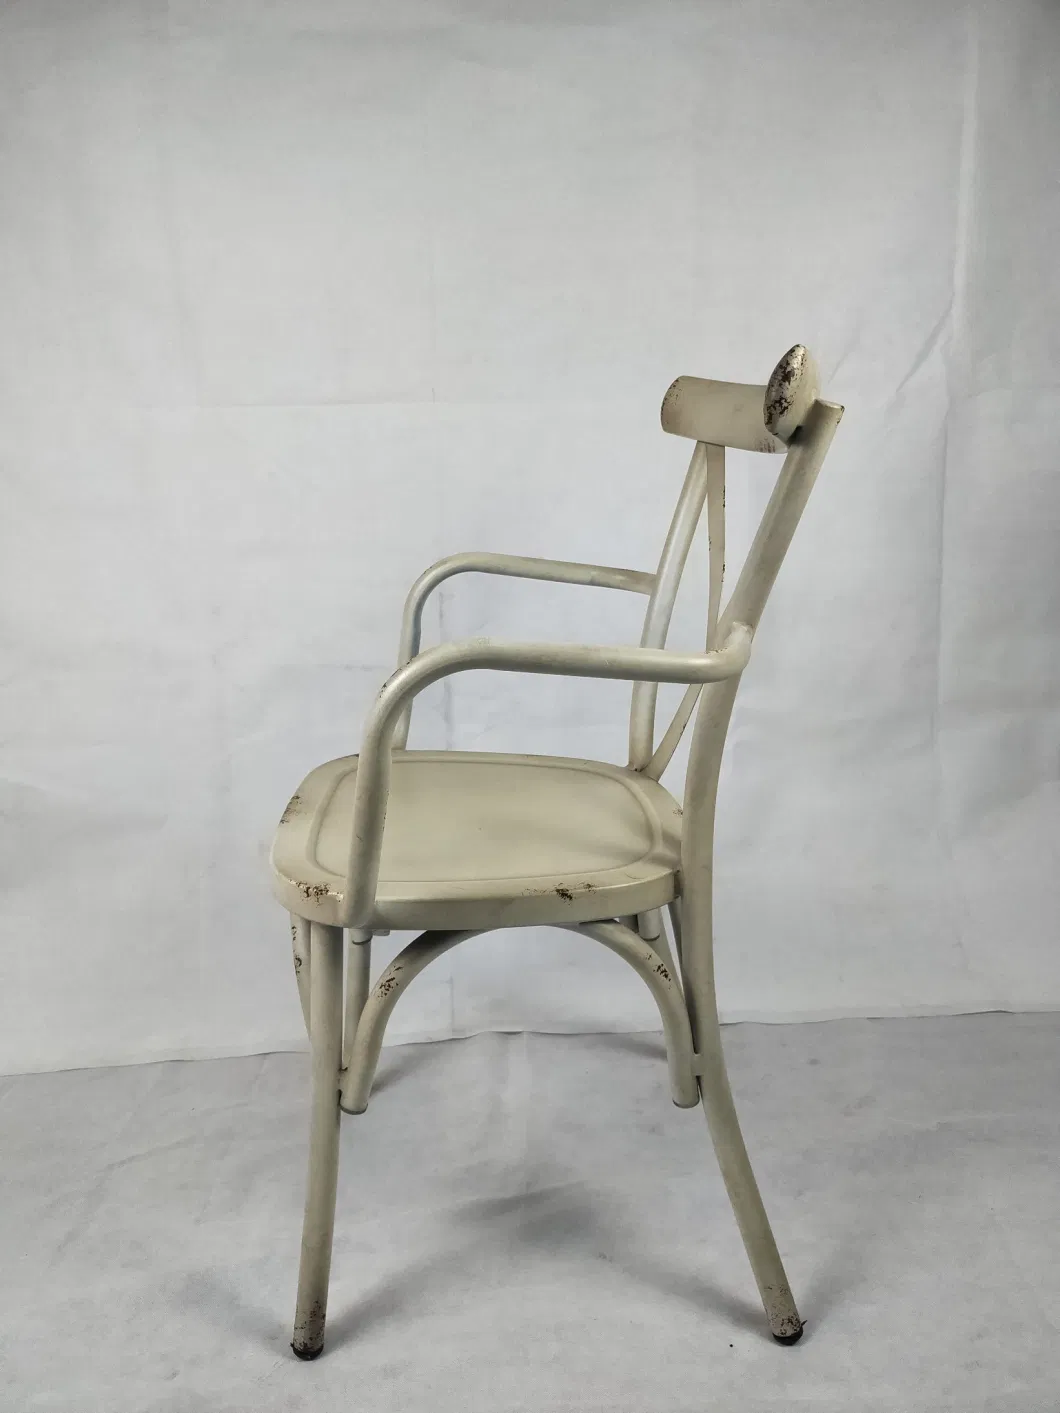 Vintage Bergamo Color Baistro Restaurant Cane Chair Aluminum Leisure Rust Resistance Outdoor Furniture